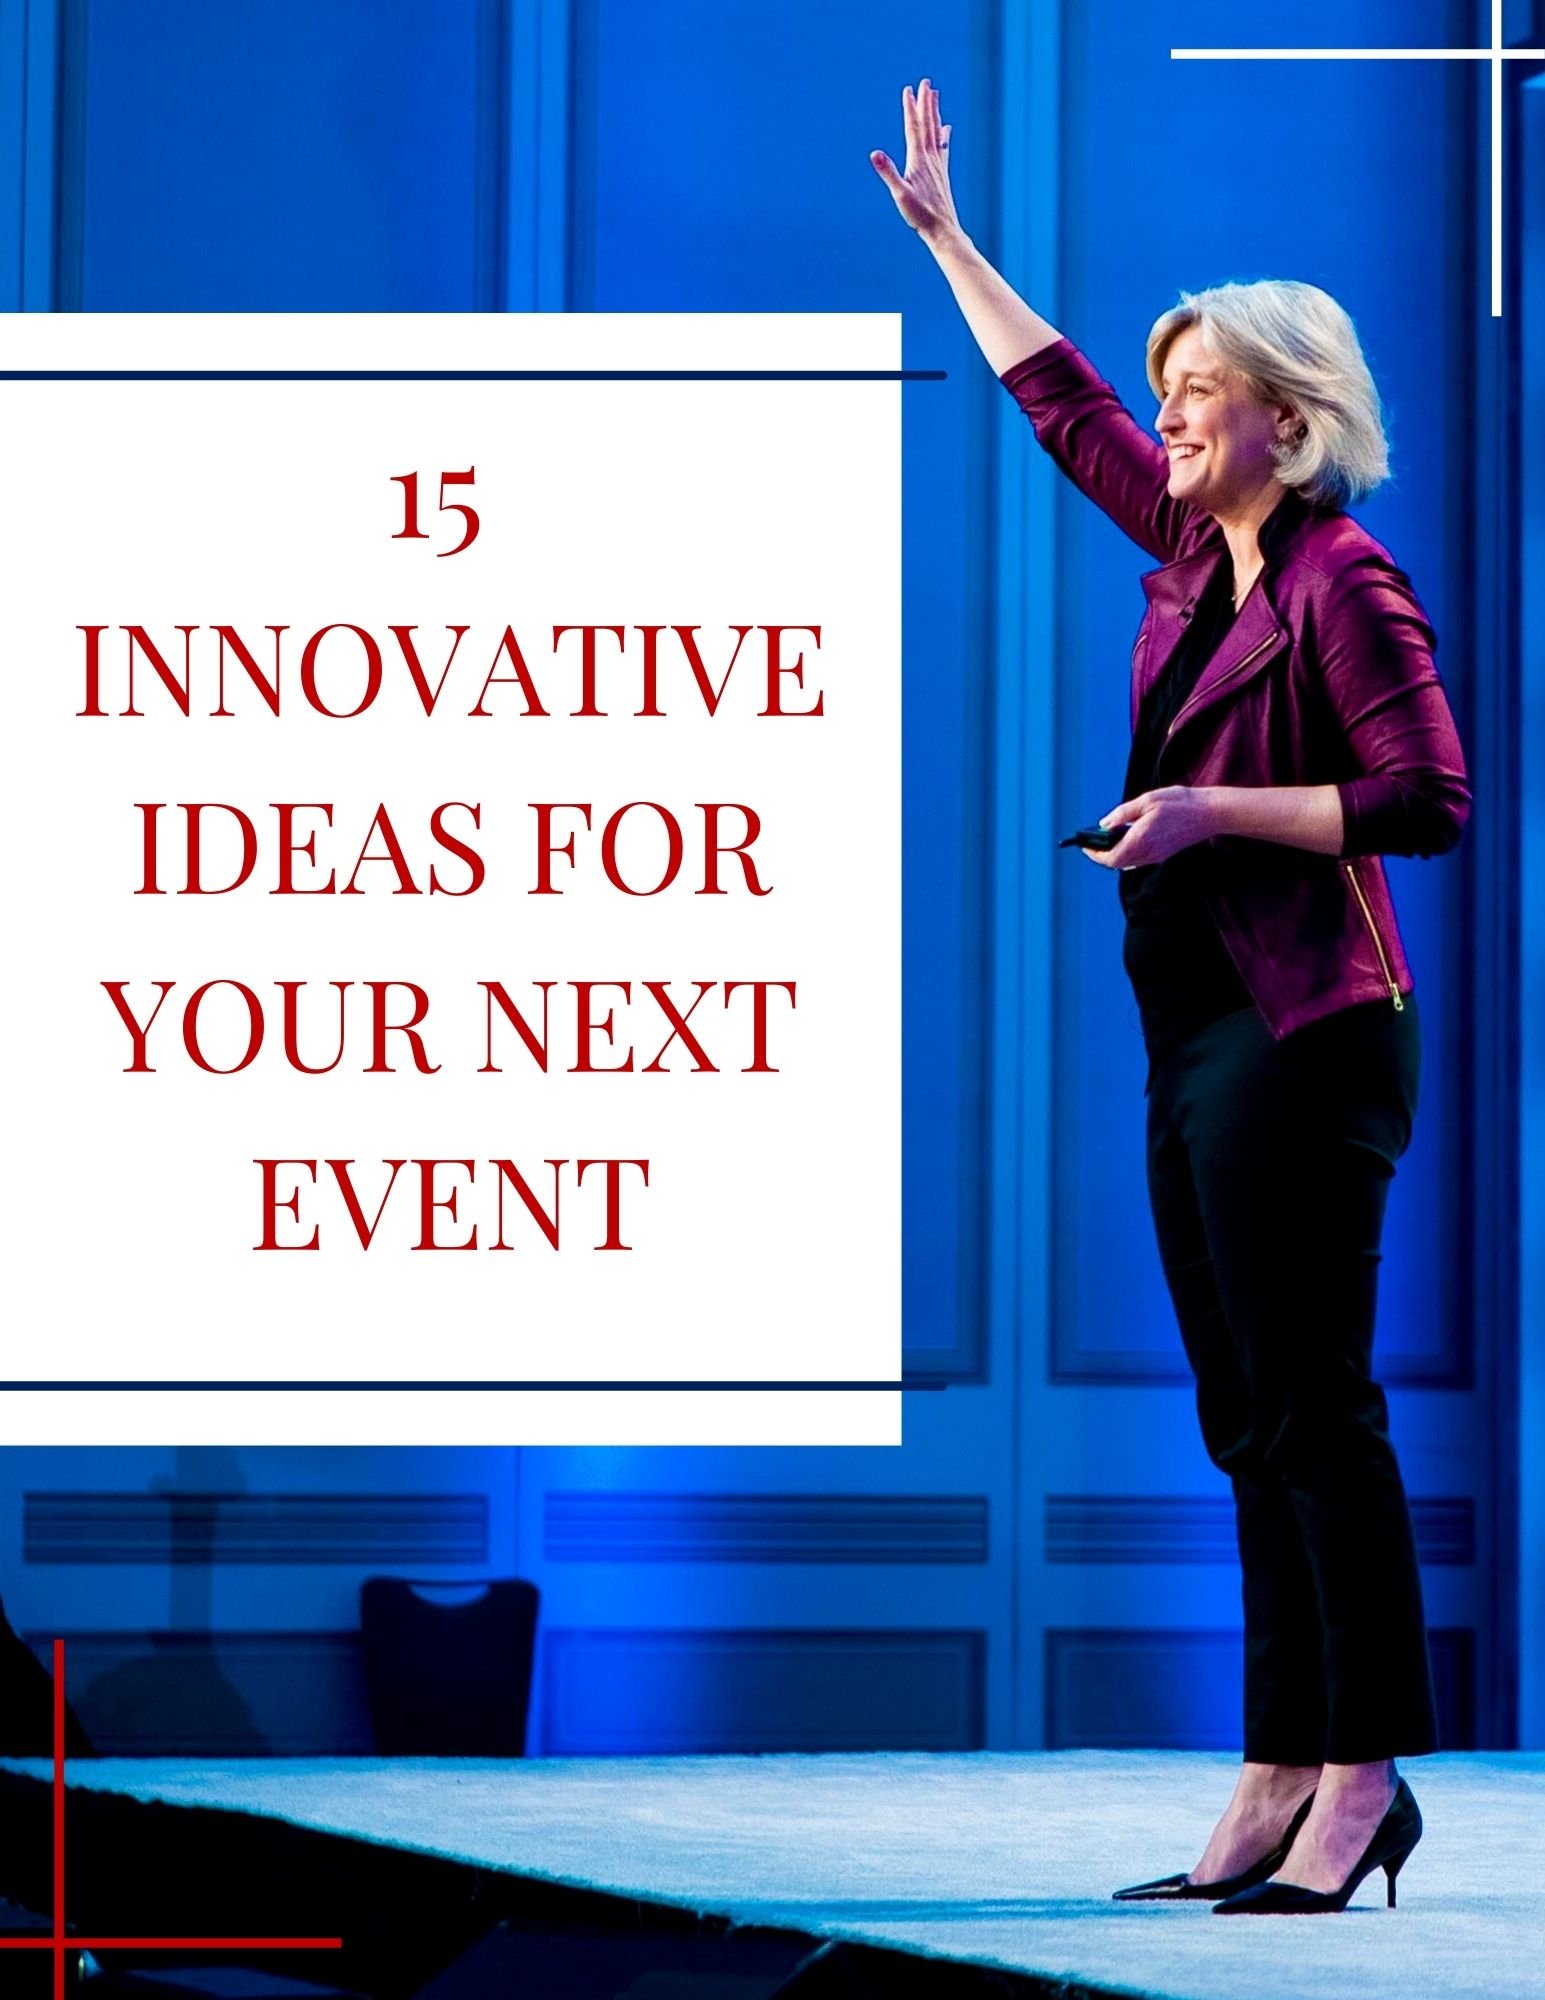 15 Innovative Ideas - The Sweeney Agency Speakers Bureau